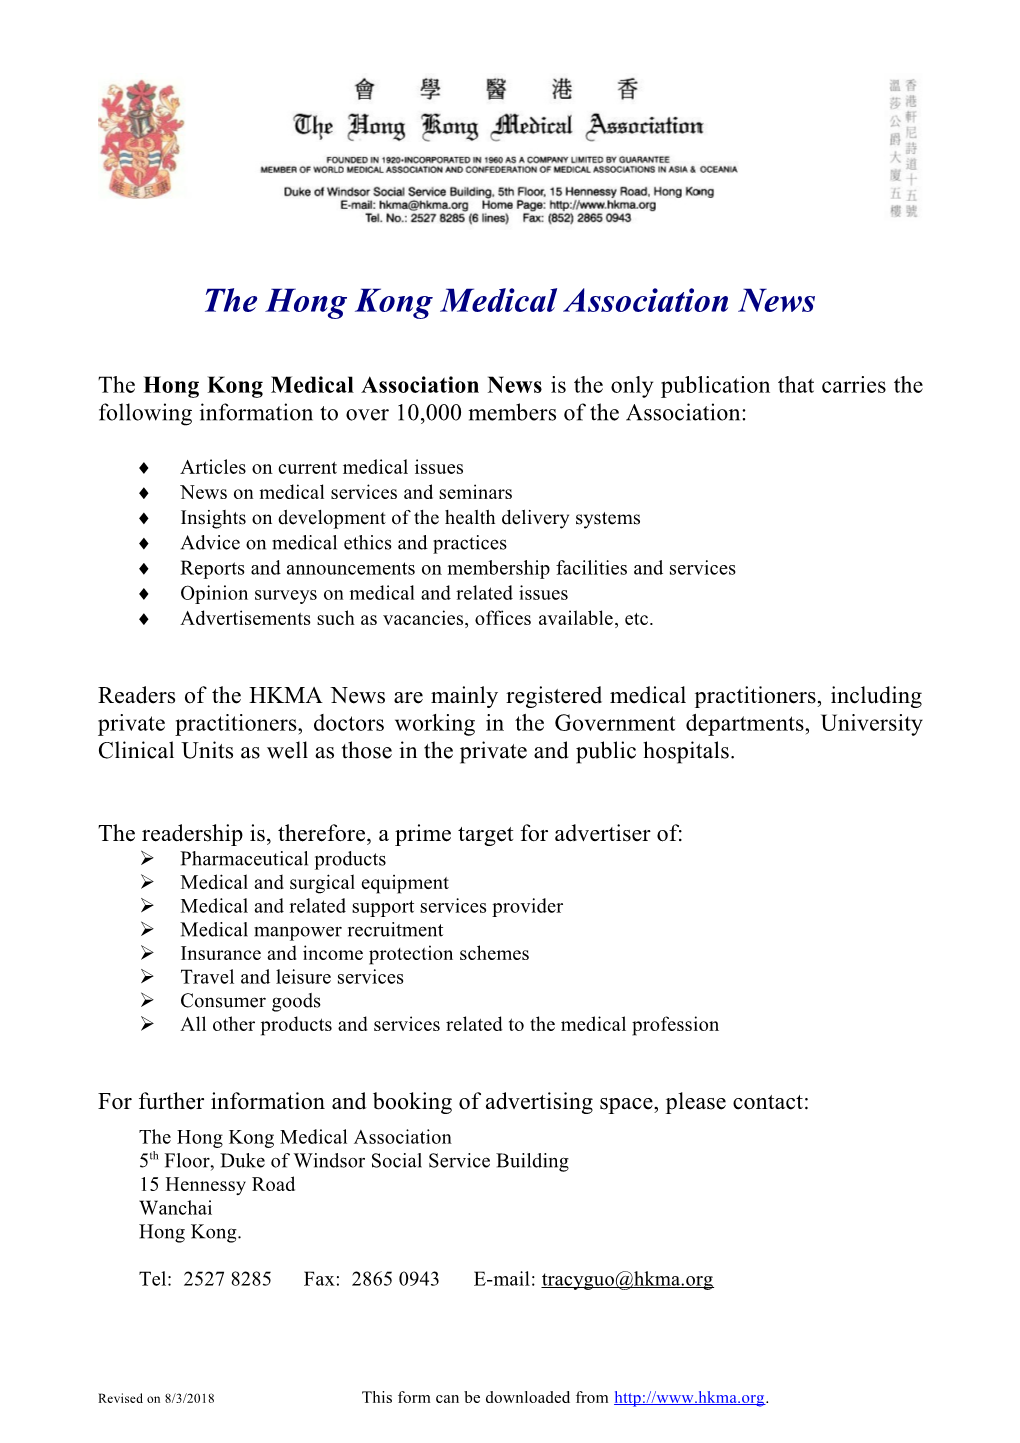 The Hong Kong Medical Association News